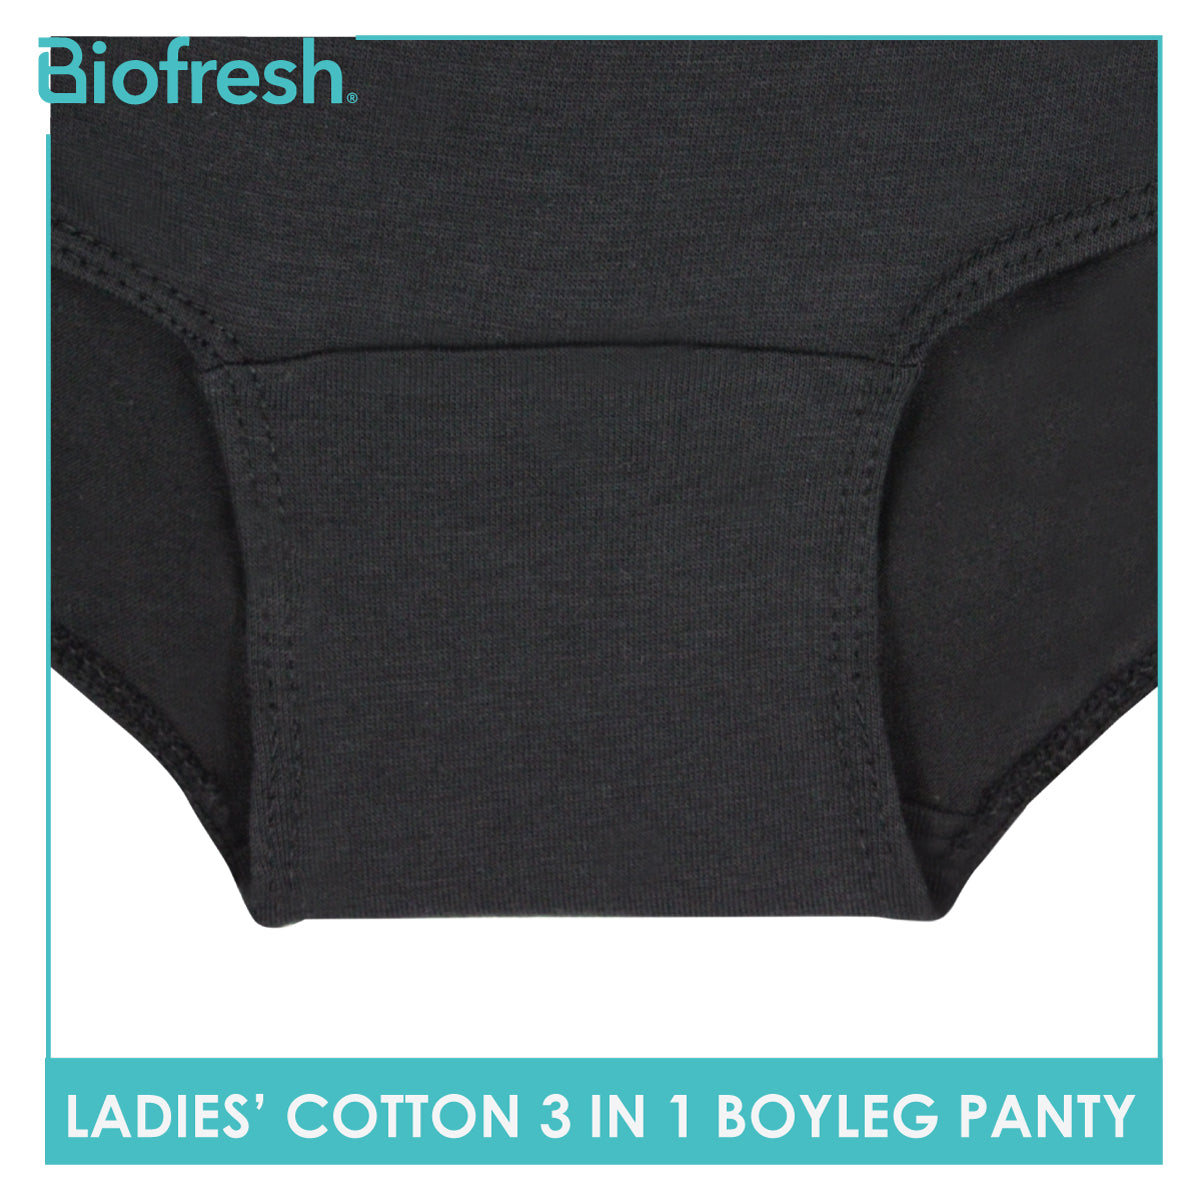 Women's Underpants Multi Pack Surprise Grab Bag, Comfortable Organic Cotton  Underpants, Elastic Free Underwear Boyleg and Brief Style 